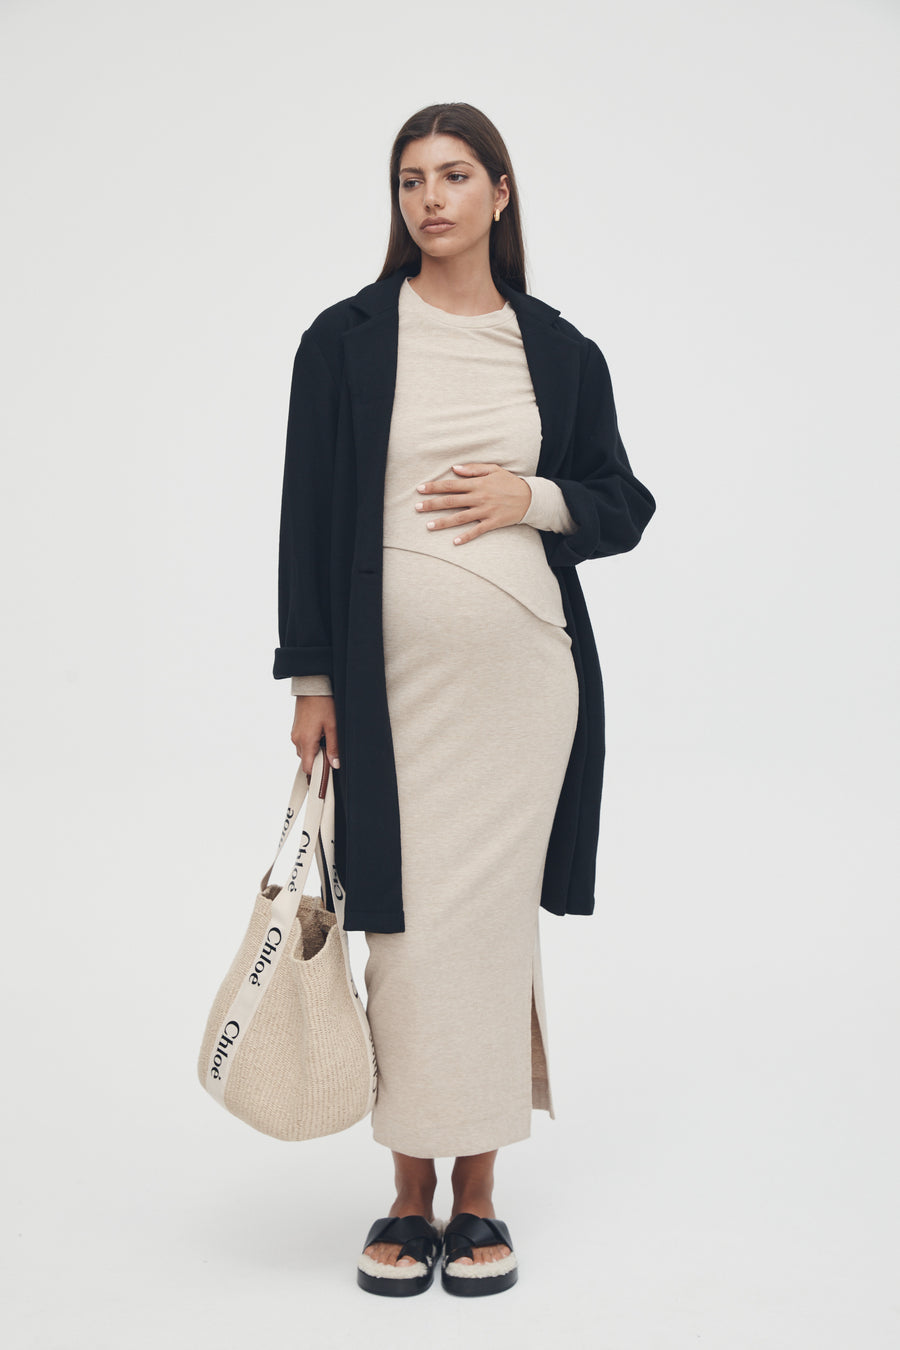 Black Maternity Coat 9